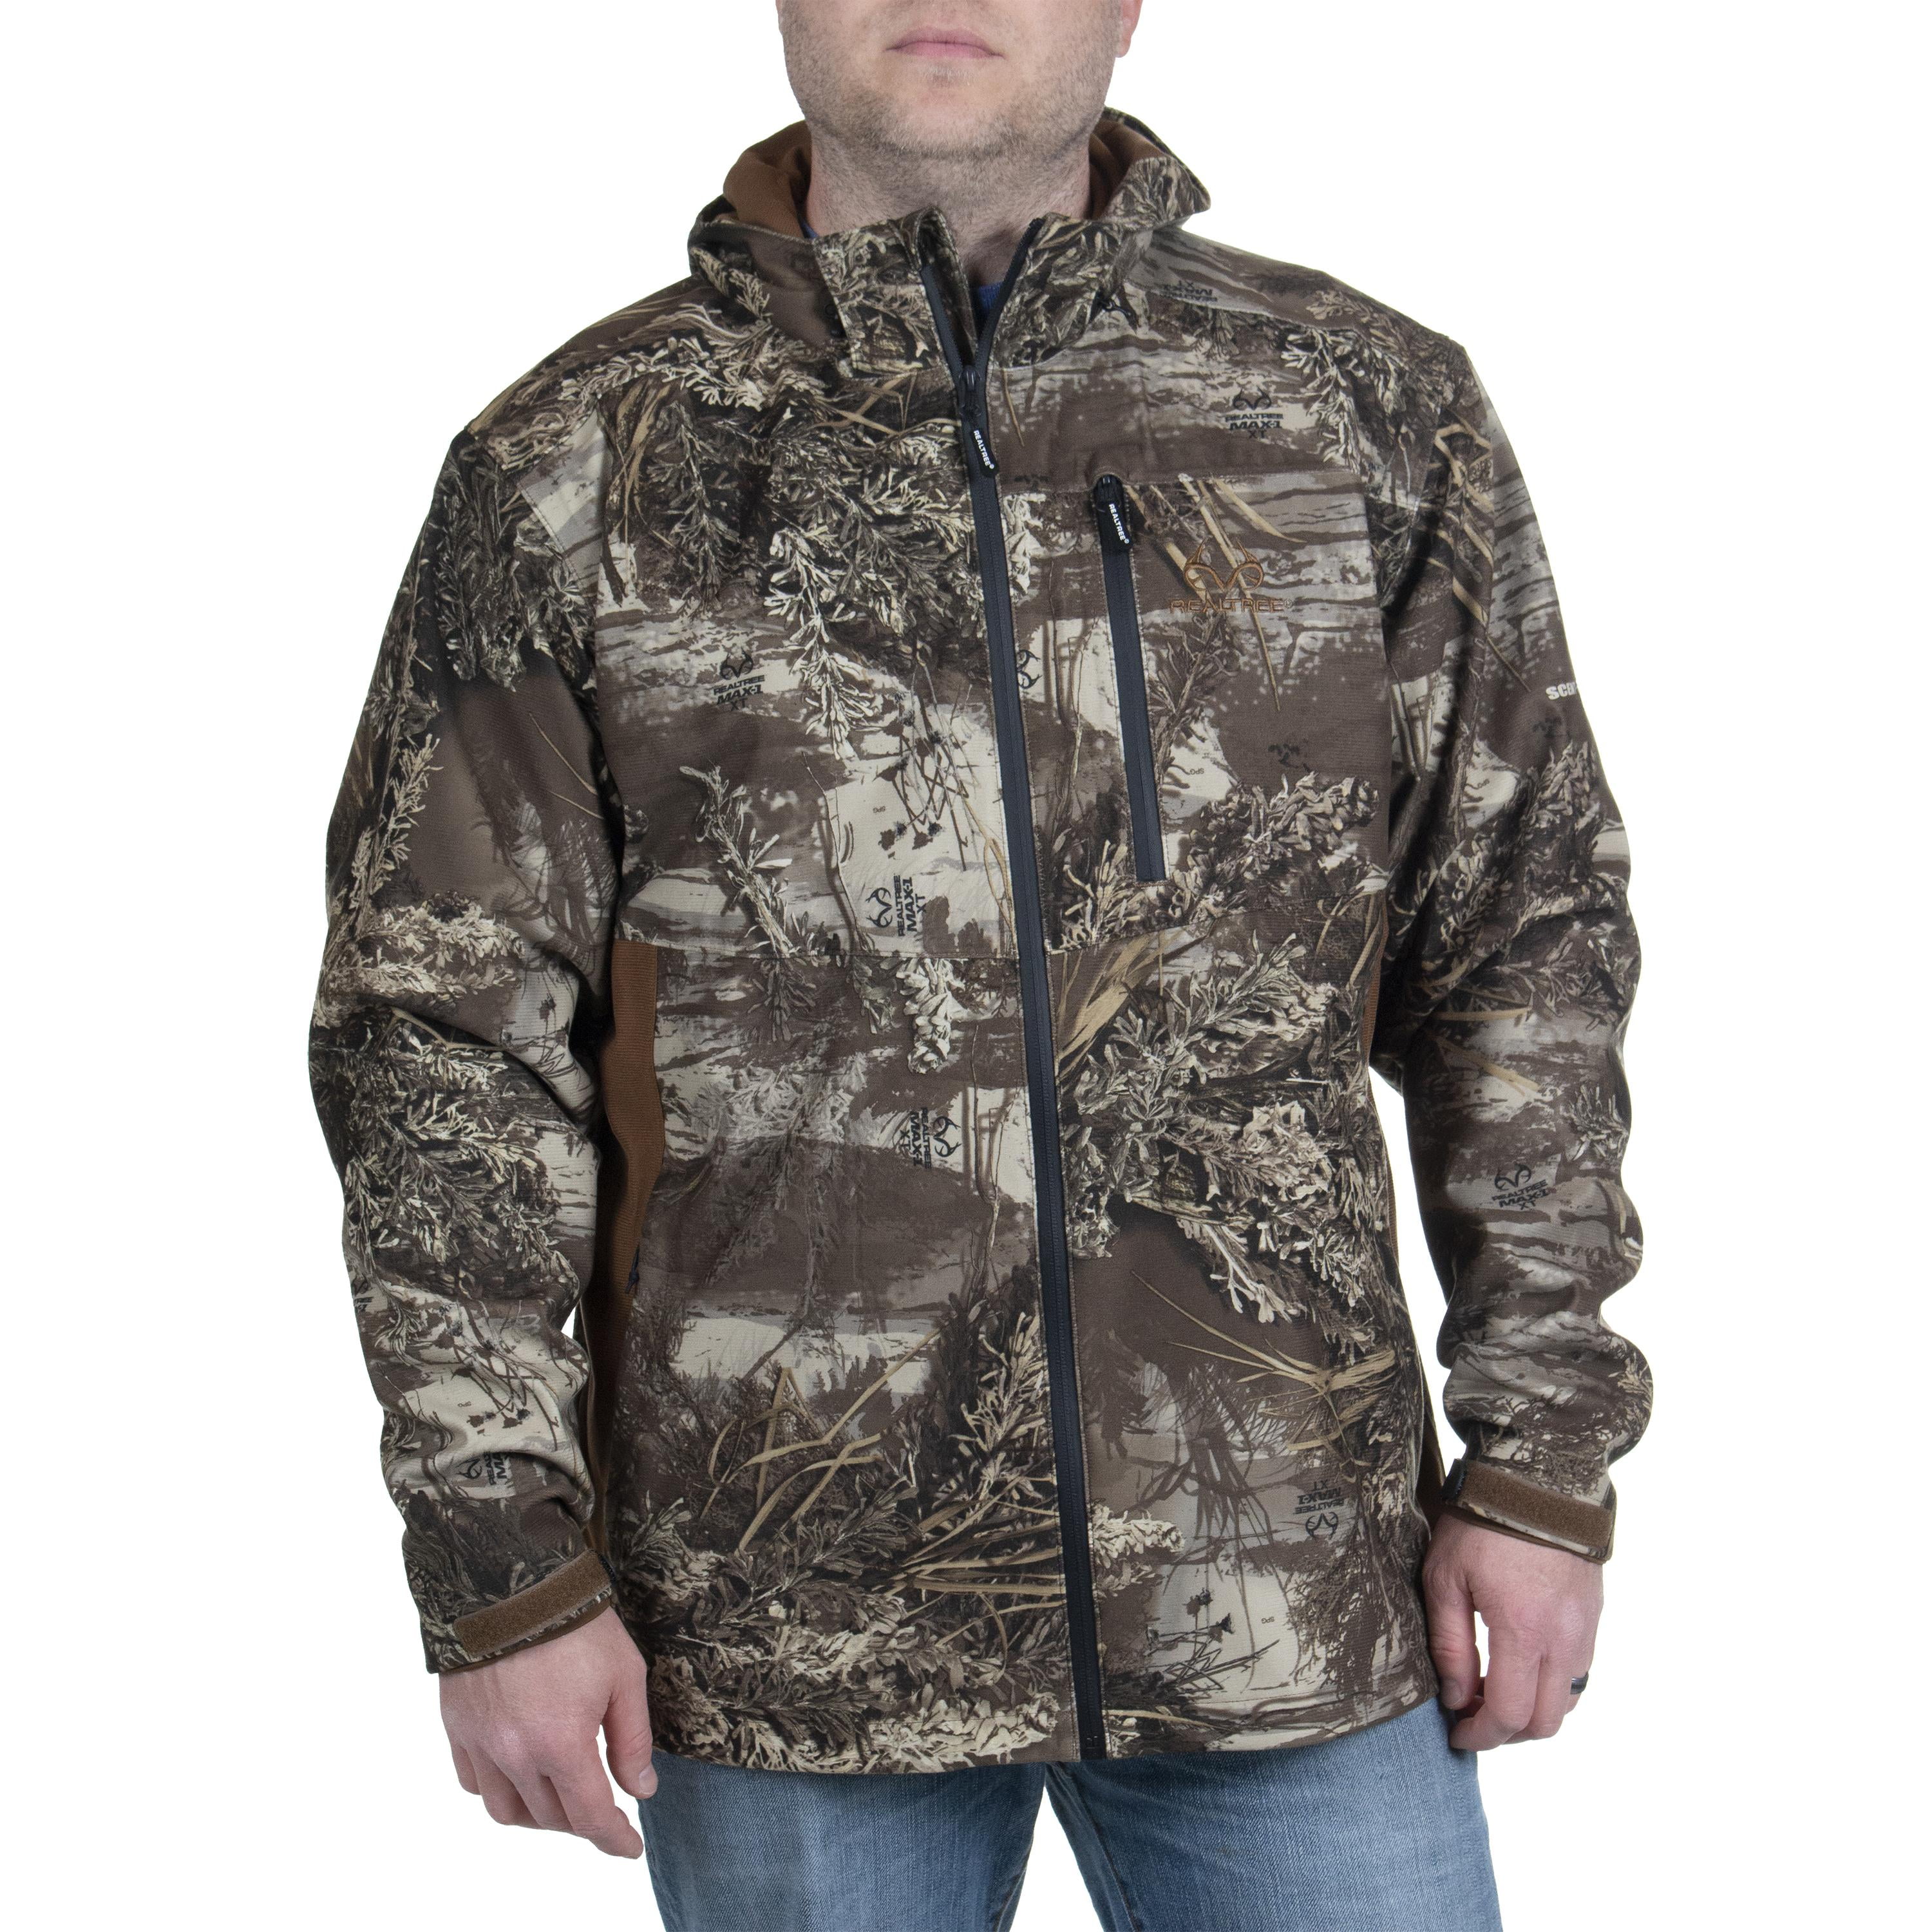 NWT Men's Realtree Xtra Fleece Jacket w/ Green Accents size XL 